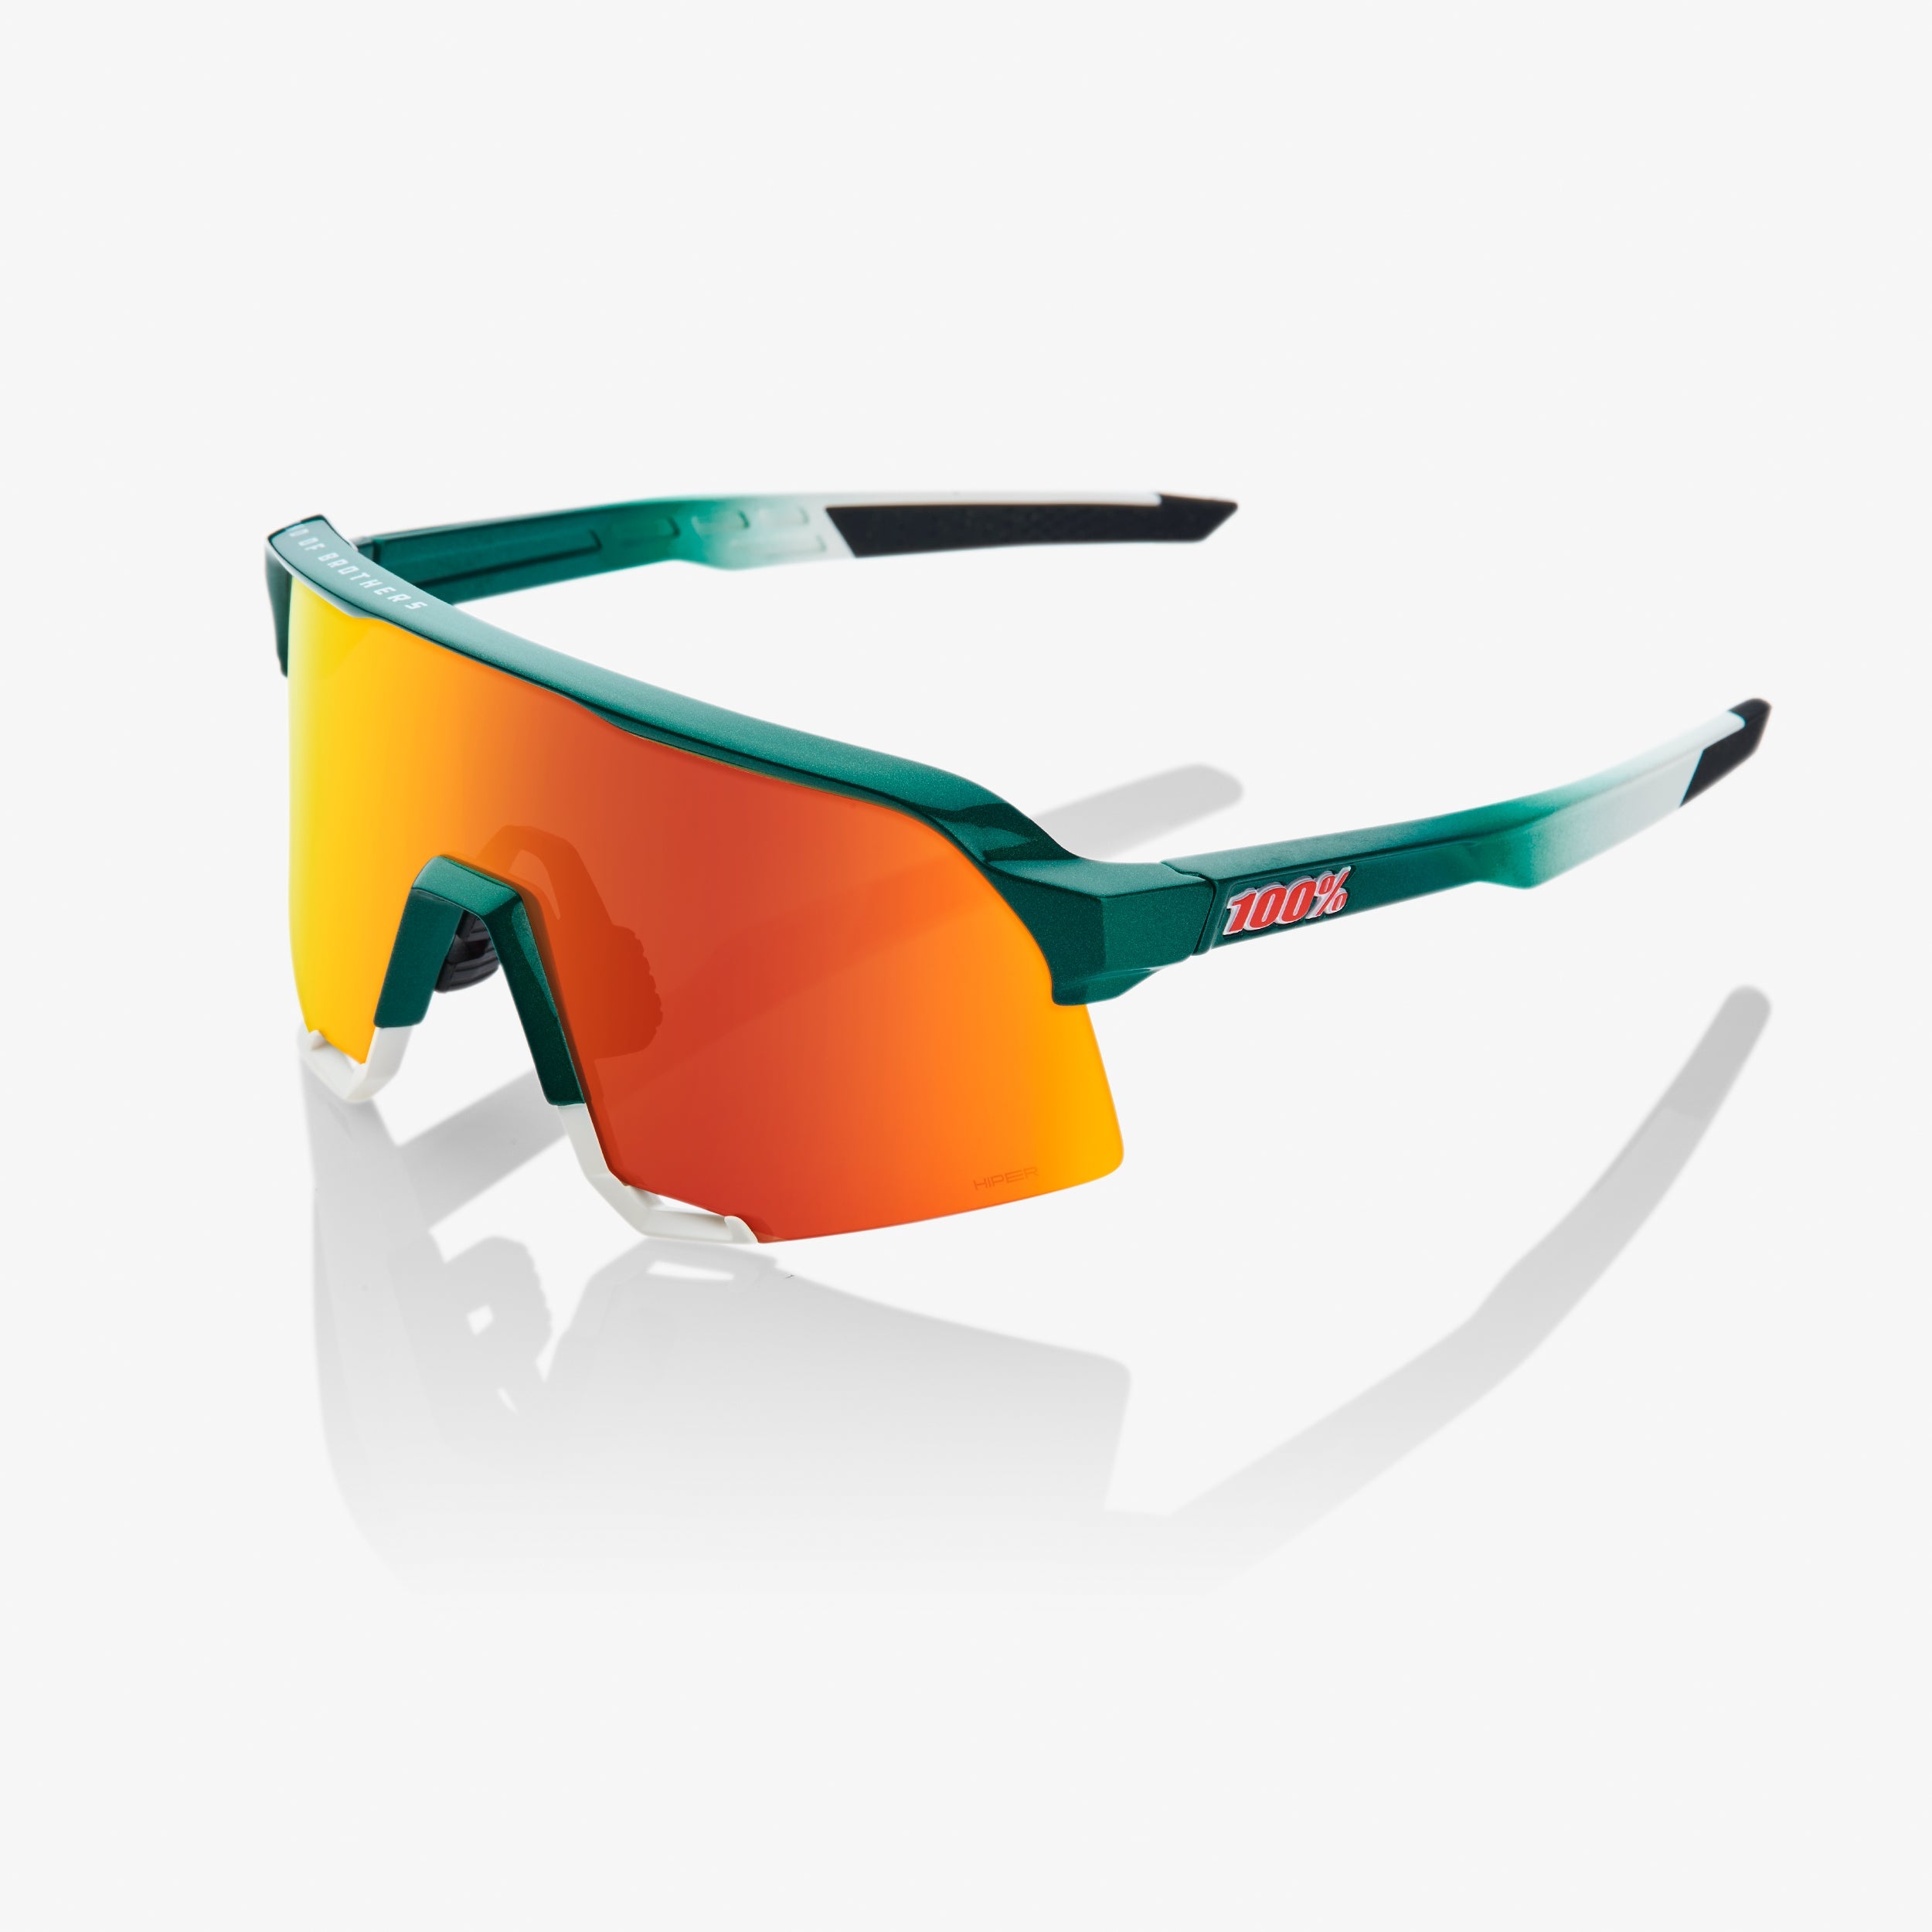 S3 Bike Glasses for Cycling and Mountain Biking - Sport